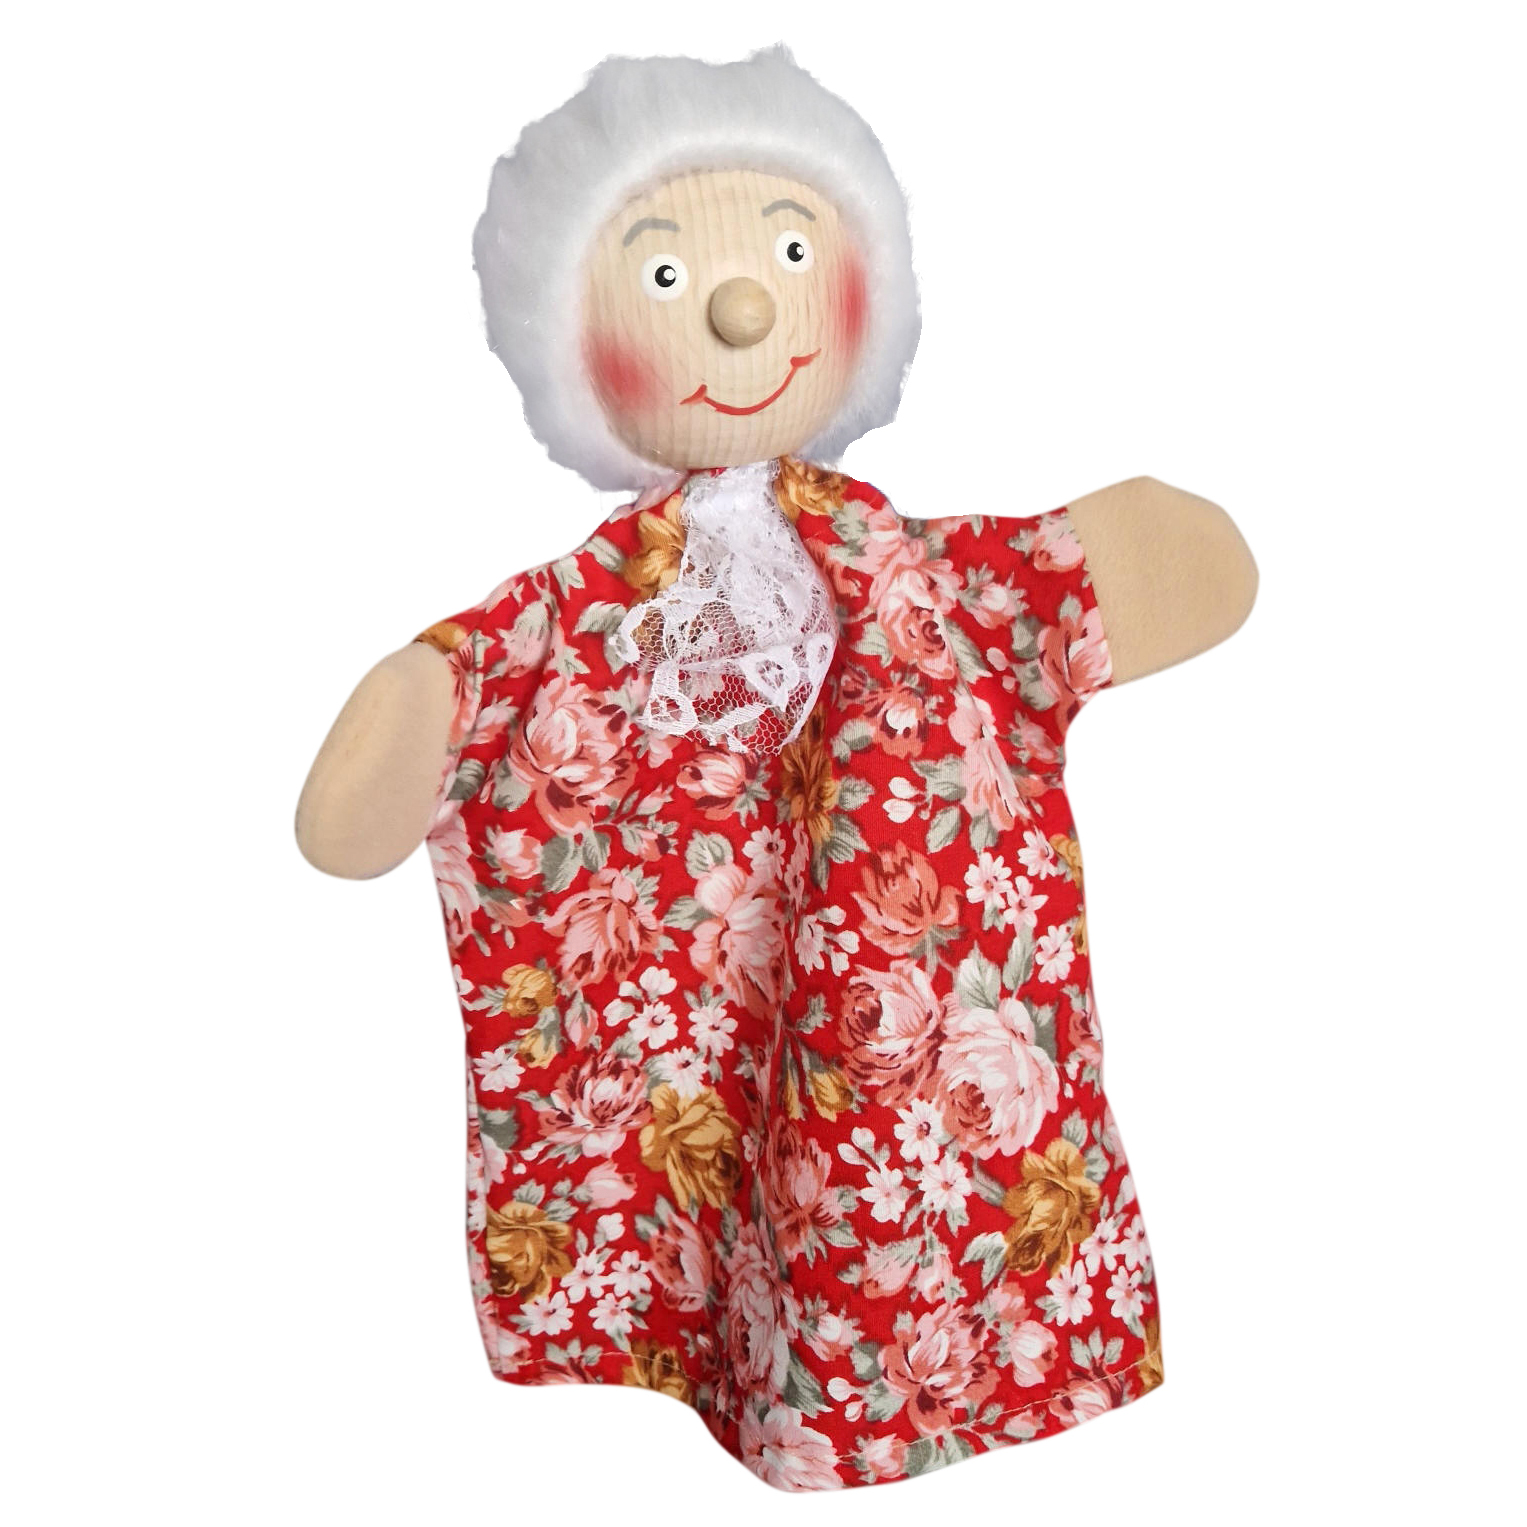 Hand puppet grandma - KERSA Beni